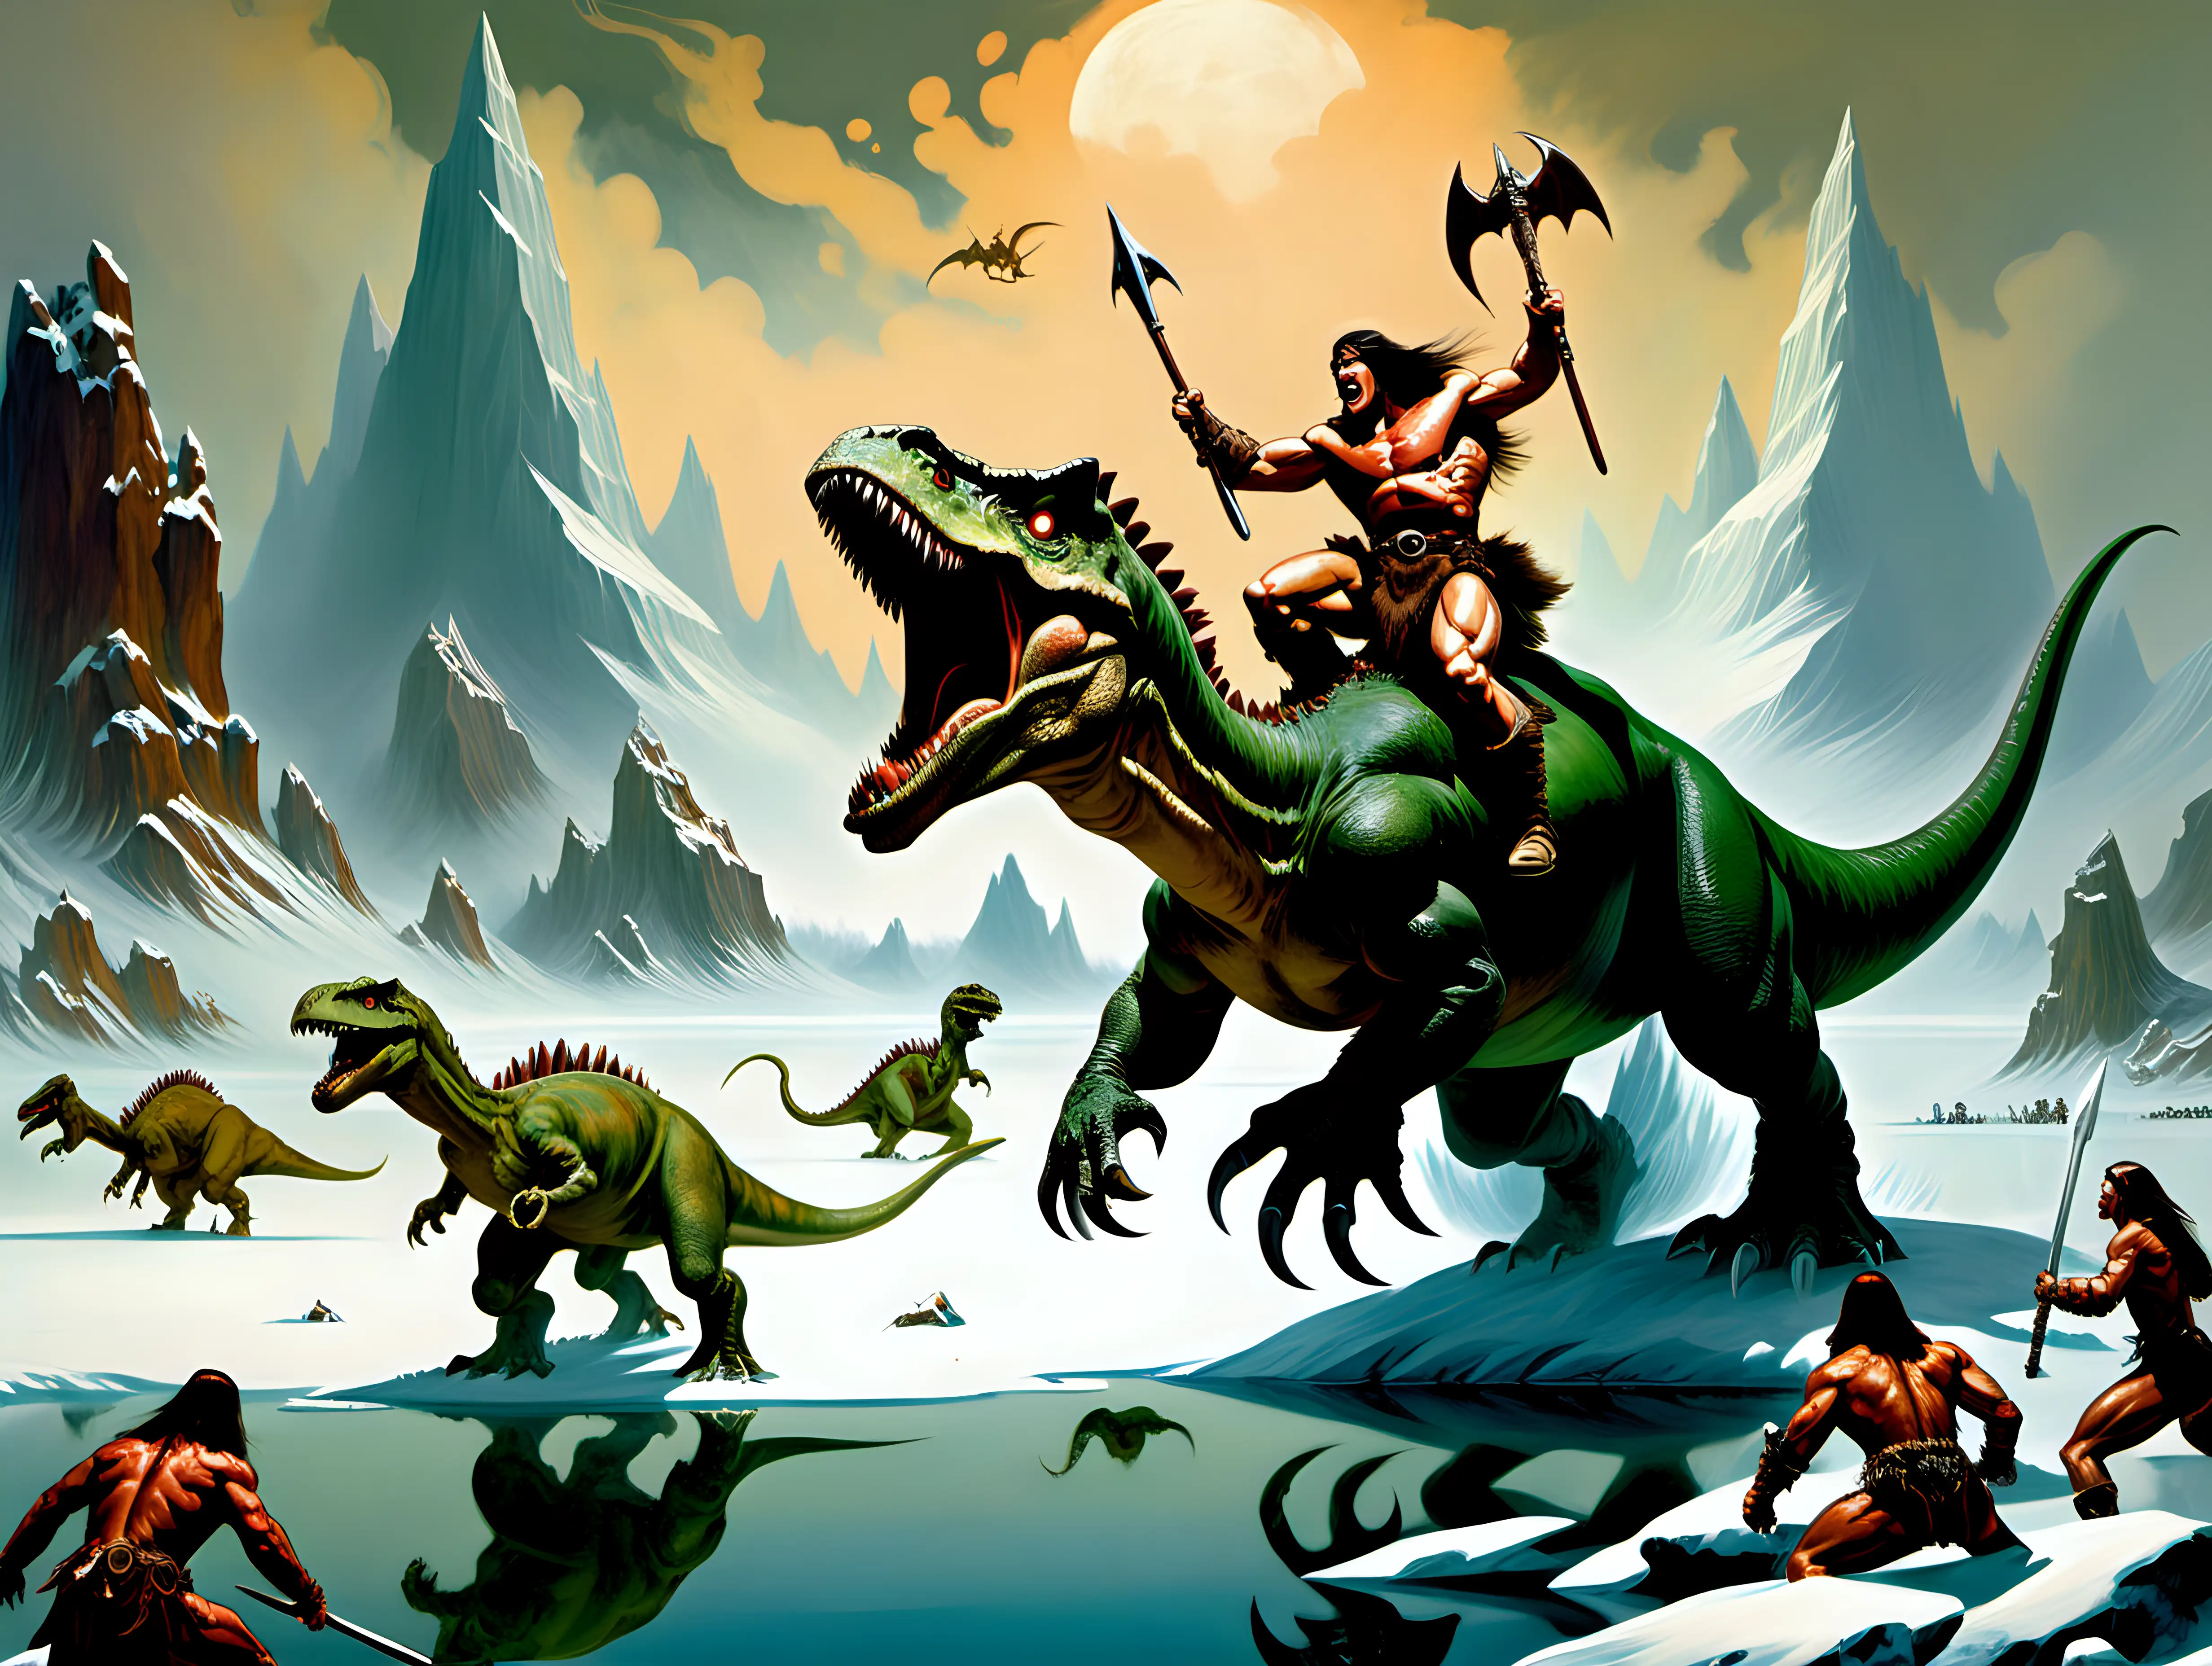 Conan the Barbarian Riding a Dinosaur Battling Dragons on a Frozen Lake Epic Fantasy Art